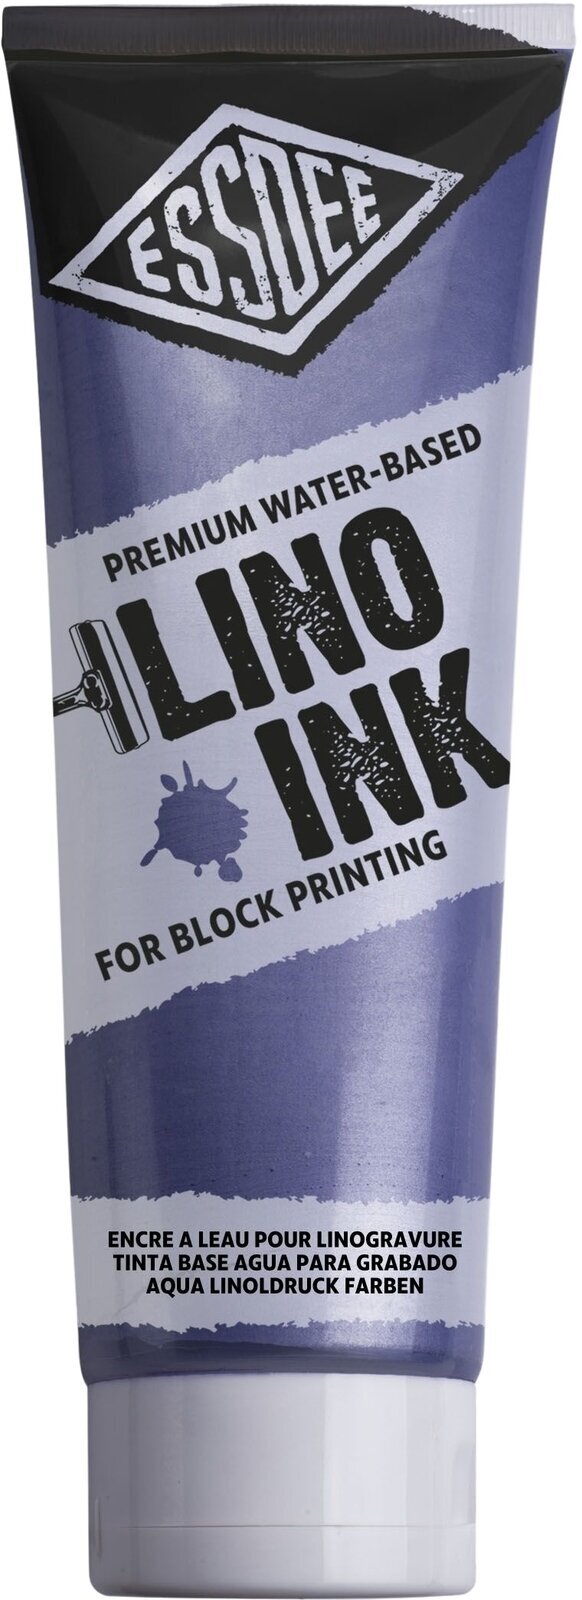 Vernice per linoleografia Essdee Block Printing Ink Vernice per linoleografia Pearlescent Violet 300 ml